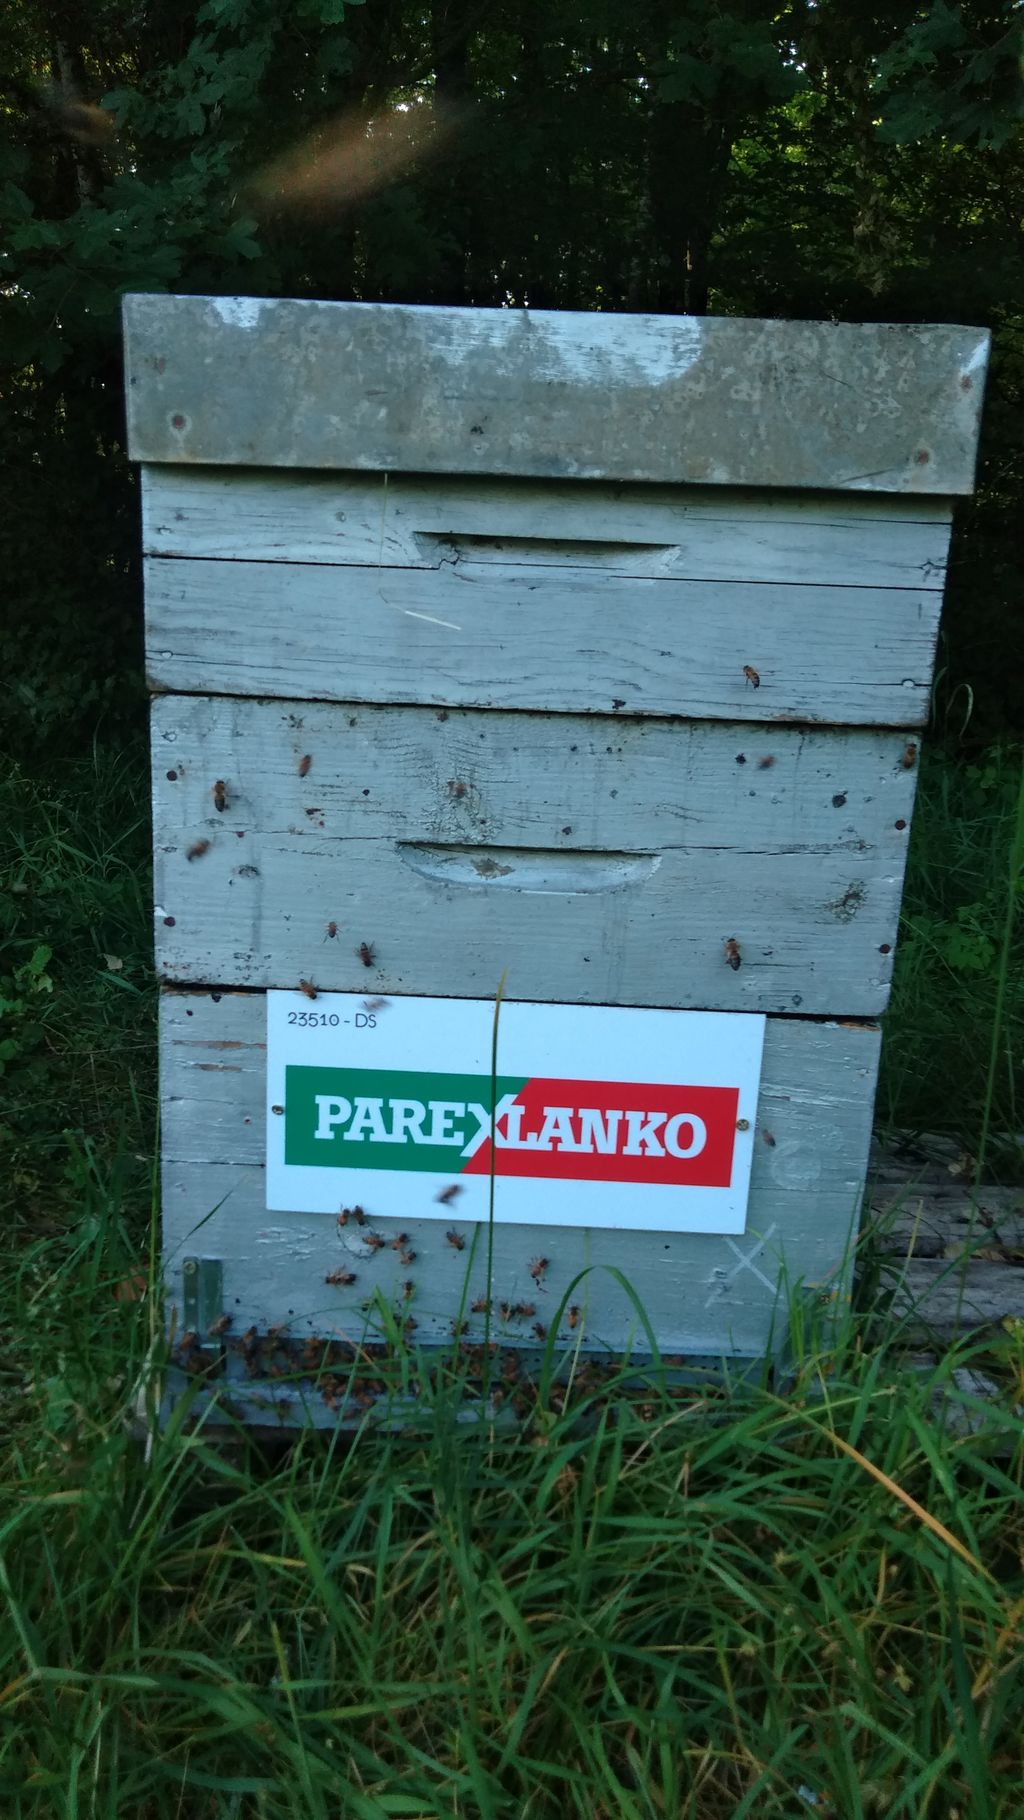 La ruche Parex lanko